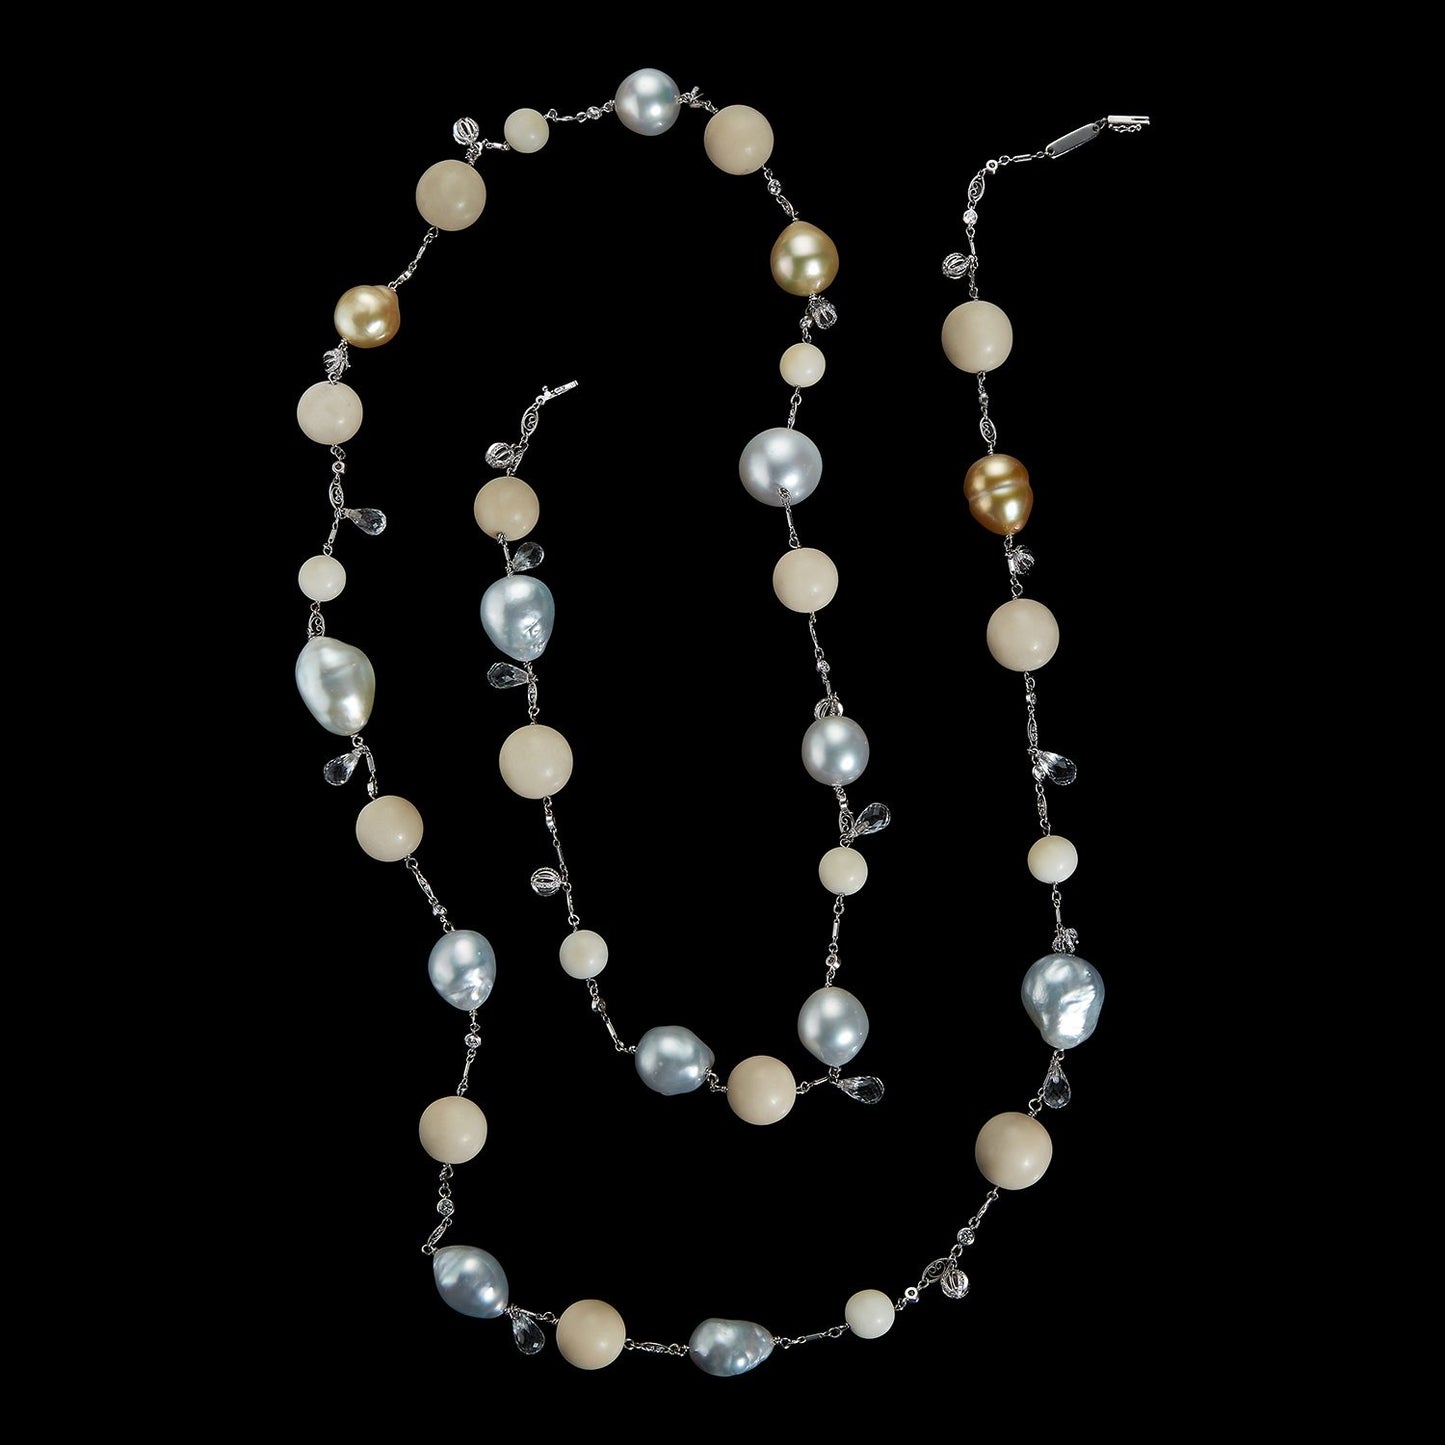 Tagua & South Sea Artisanal Farm Pearls and Bead Sautoir Necklace - Alexandra Mor online